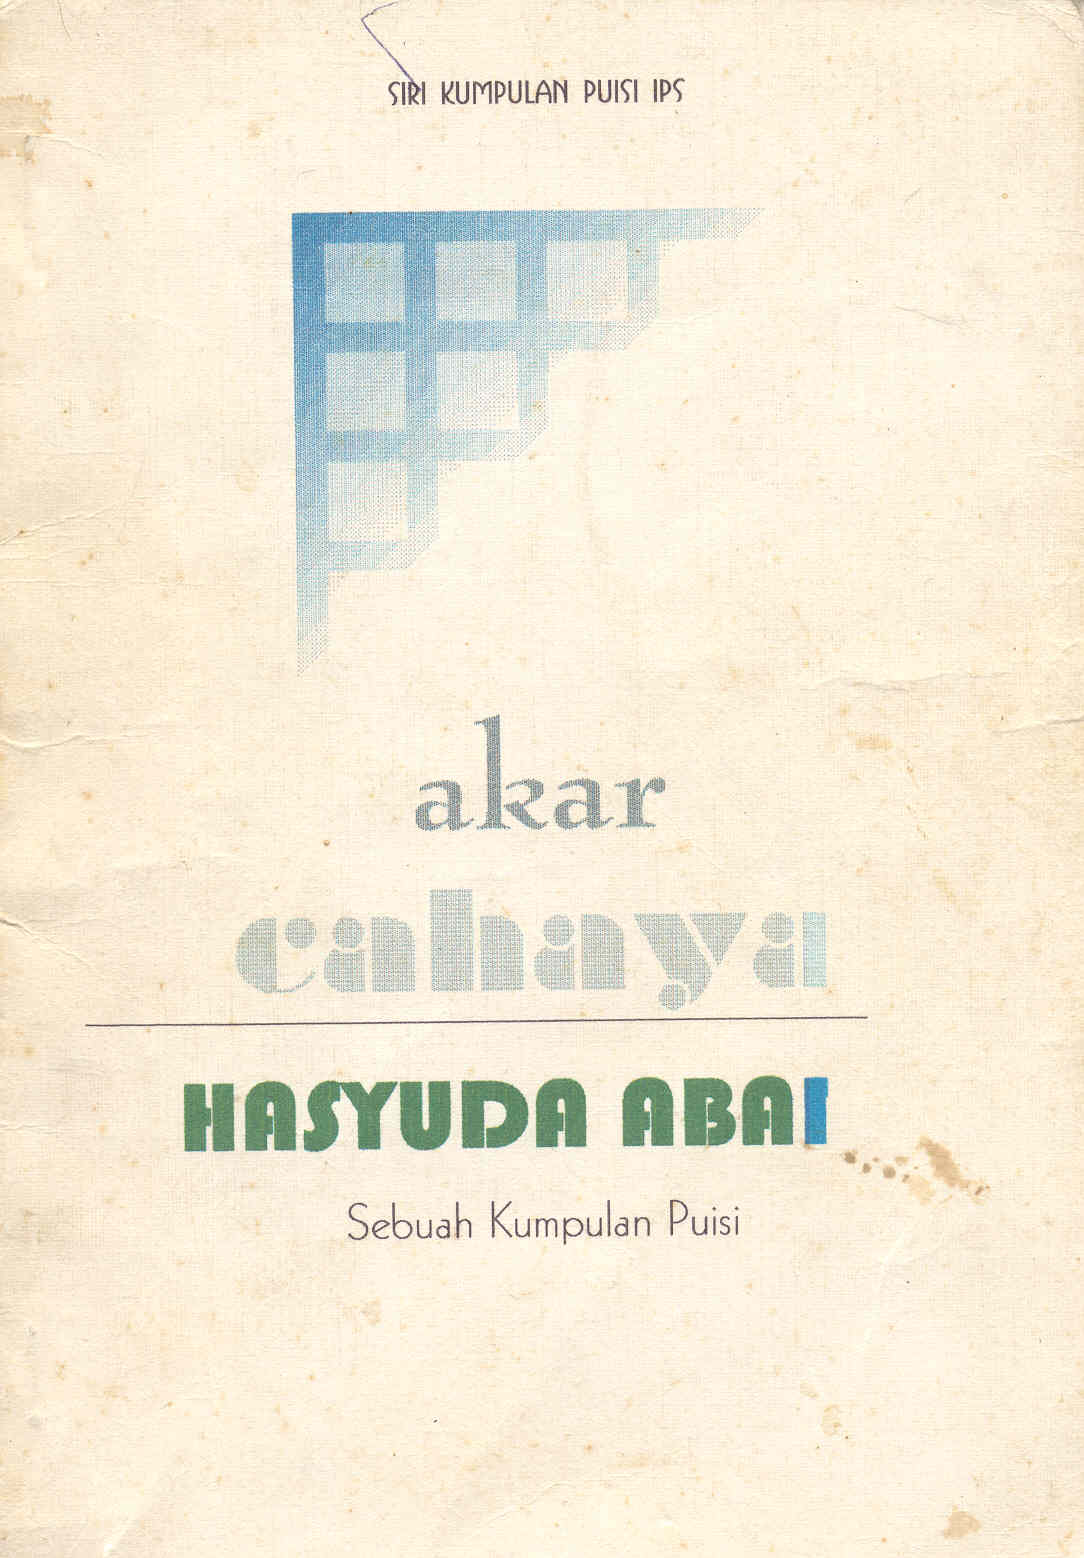 AKAR CAHAYA IPS (1997)